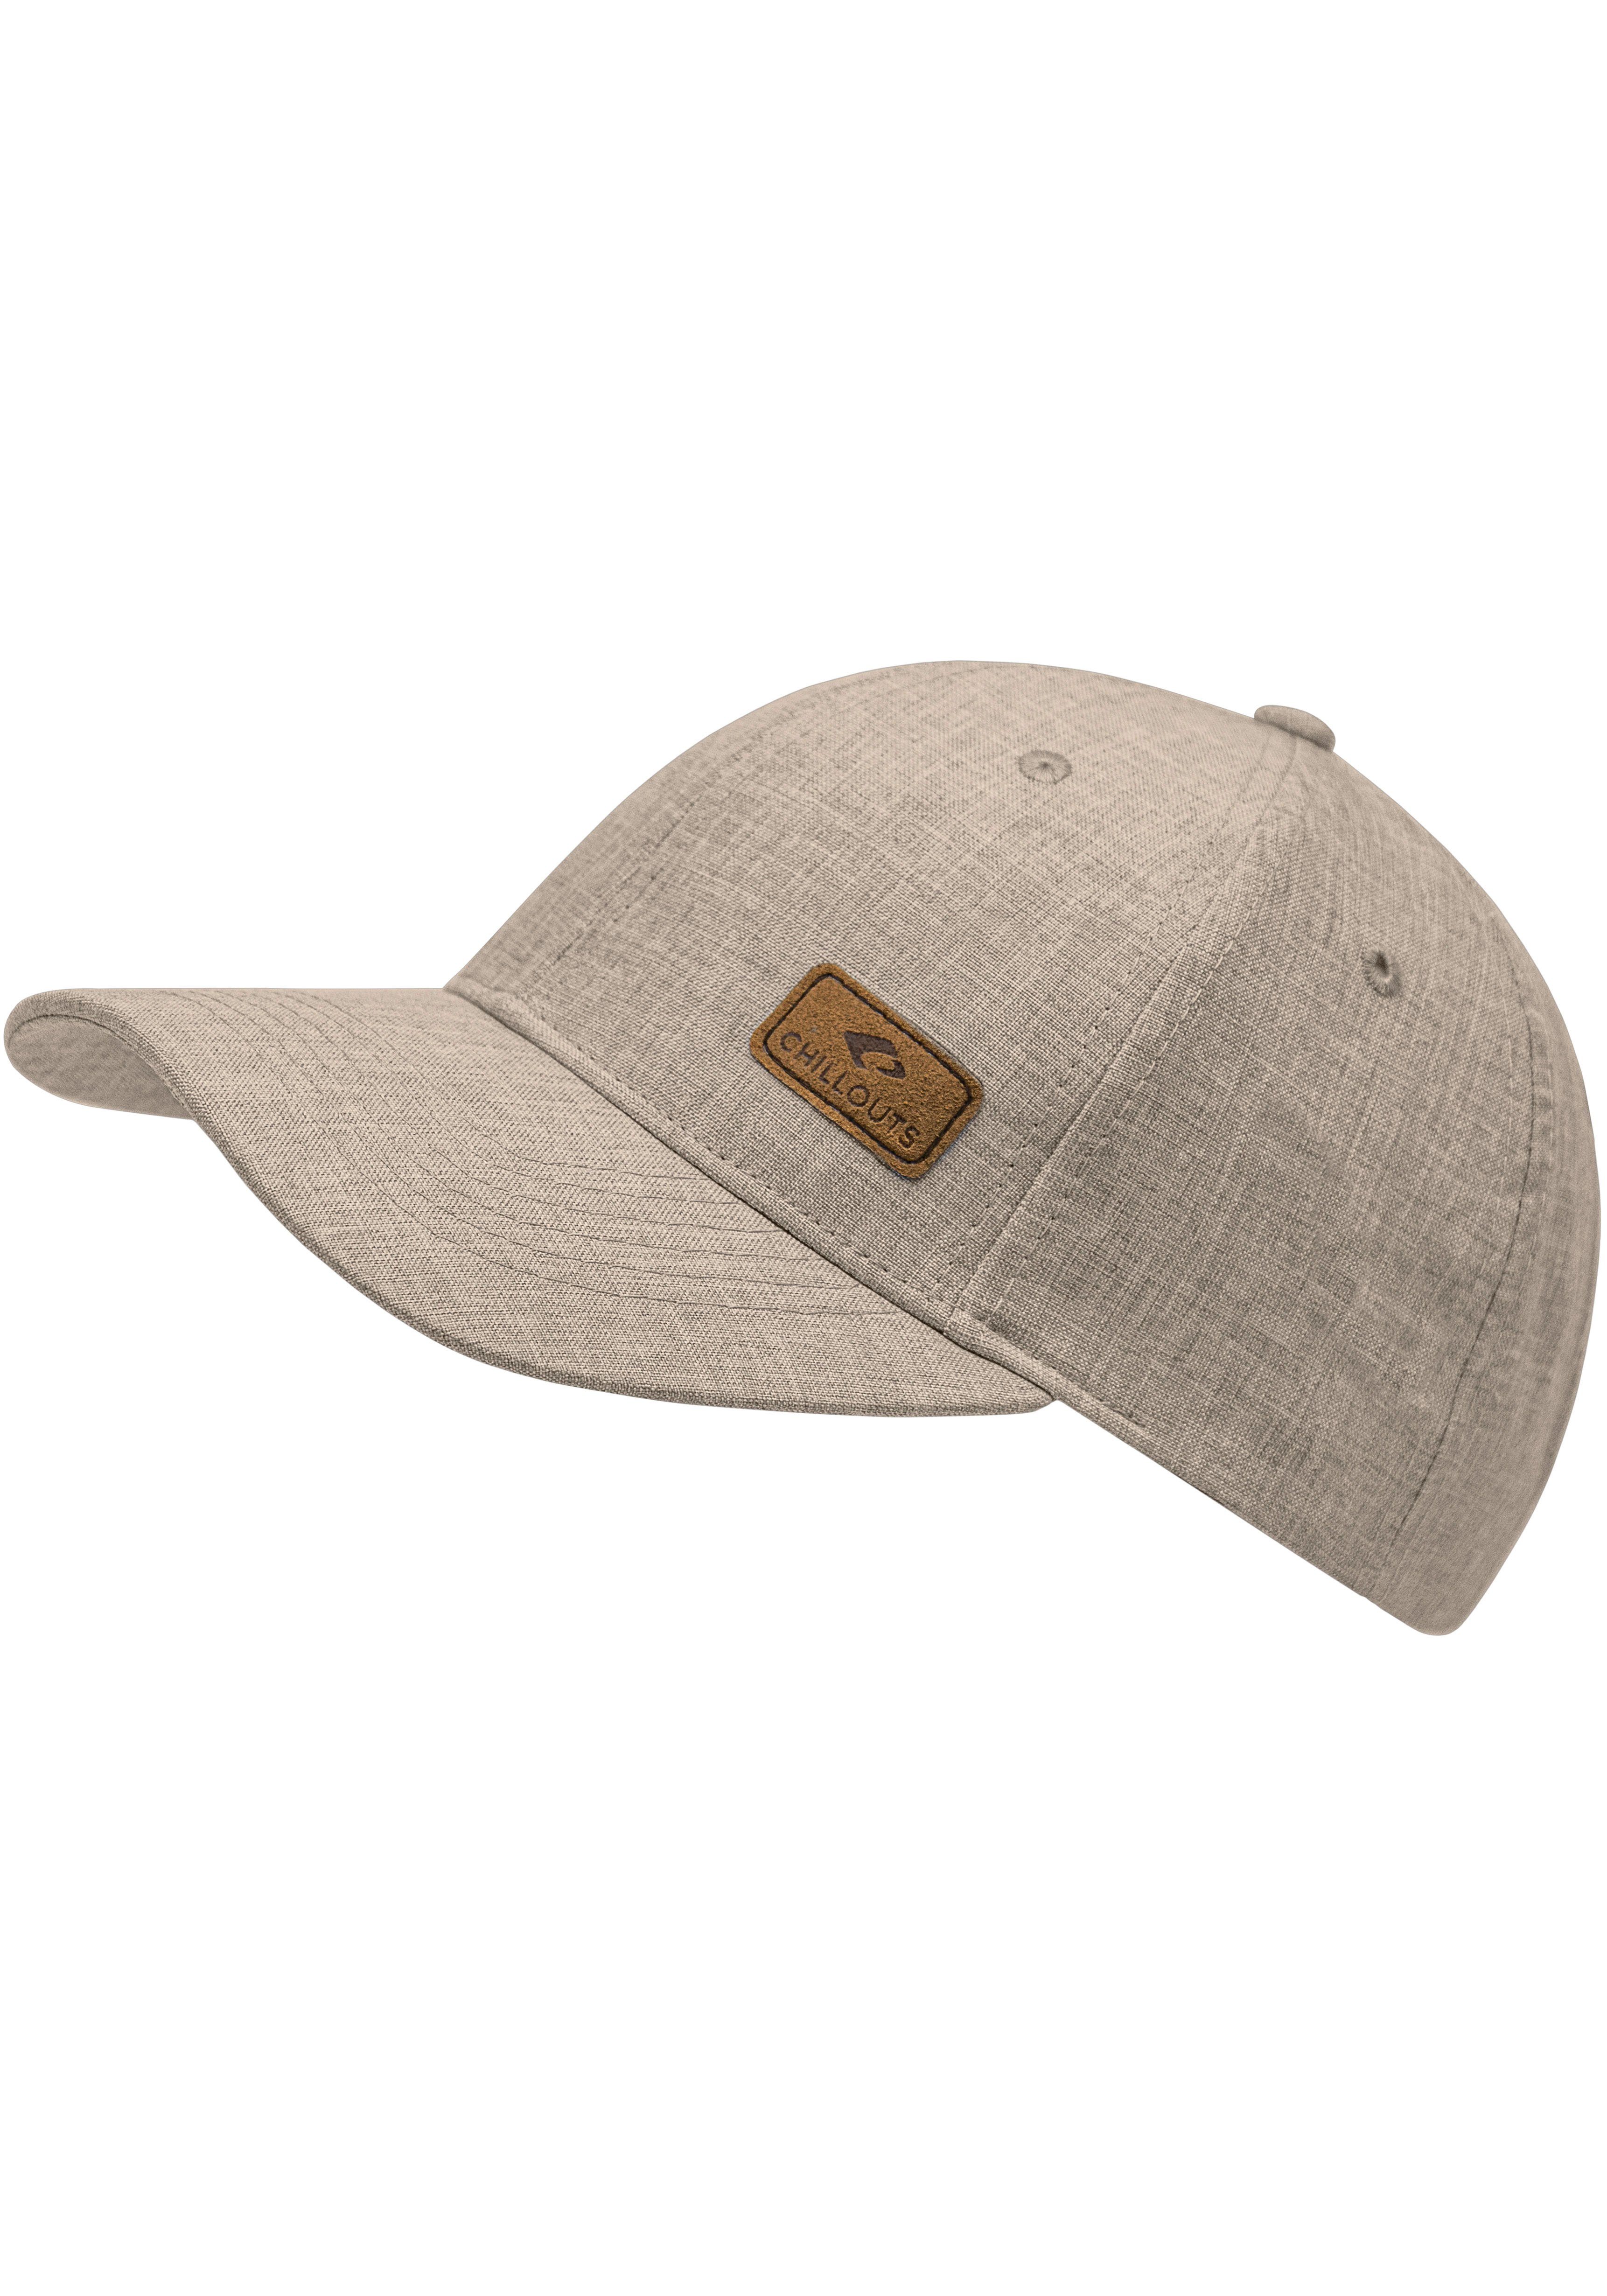 chillouts Baseball Cap Amadora Hat One melierter Optik, beige Size, verstellbar in